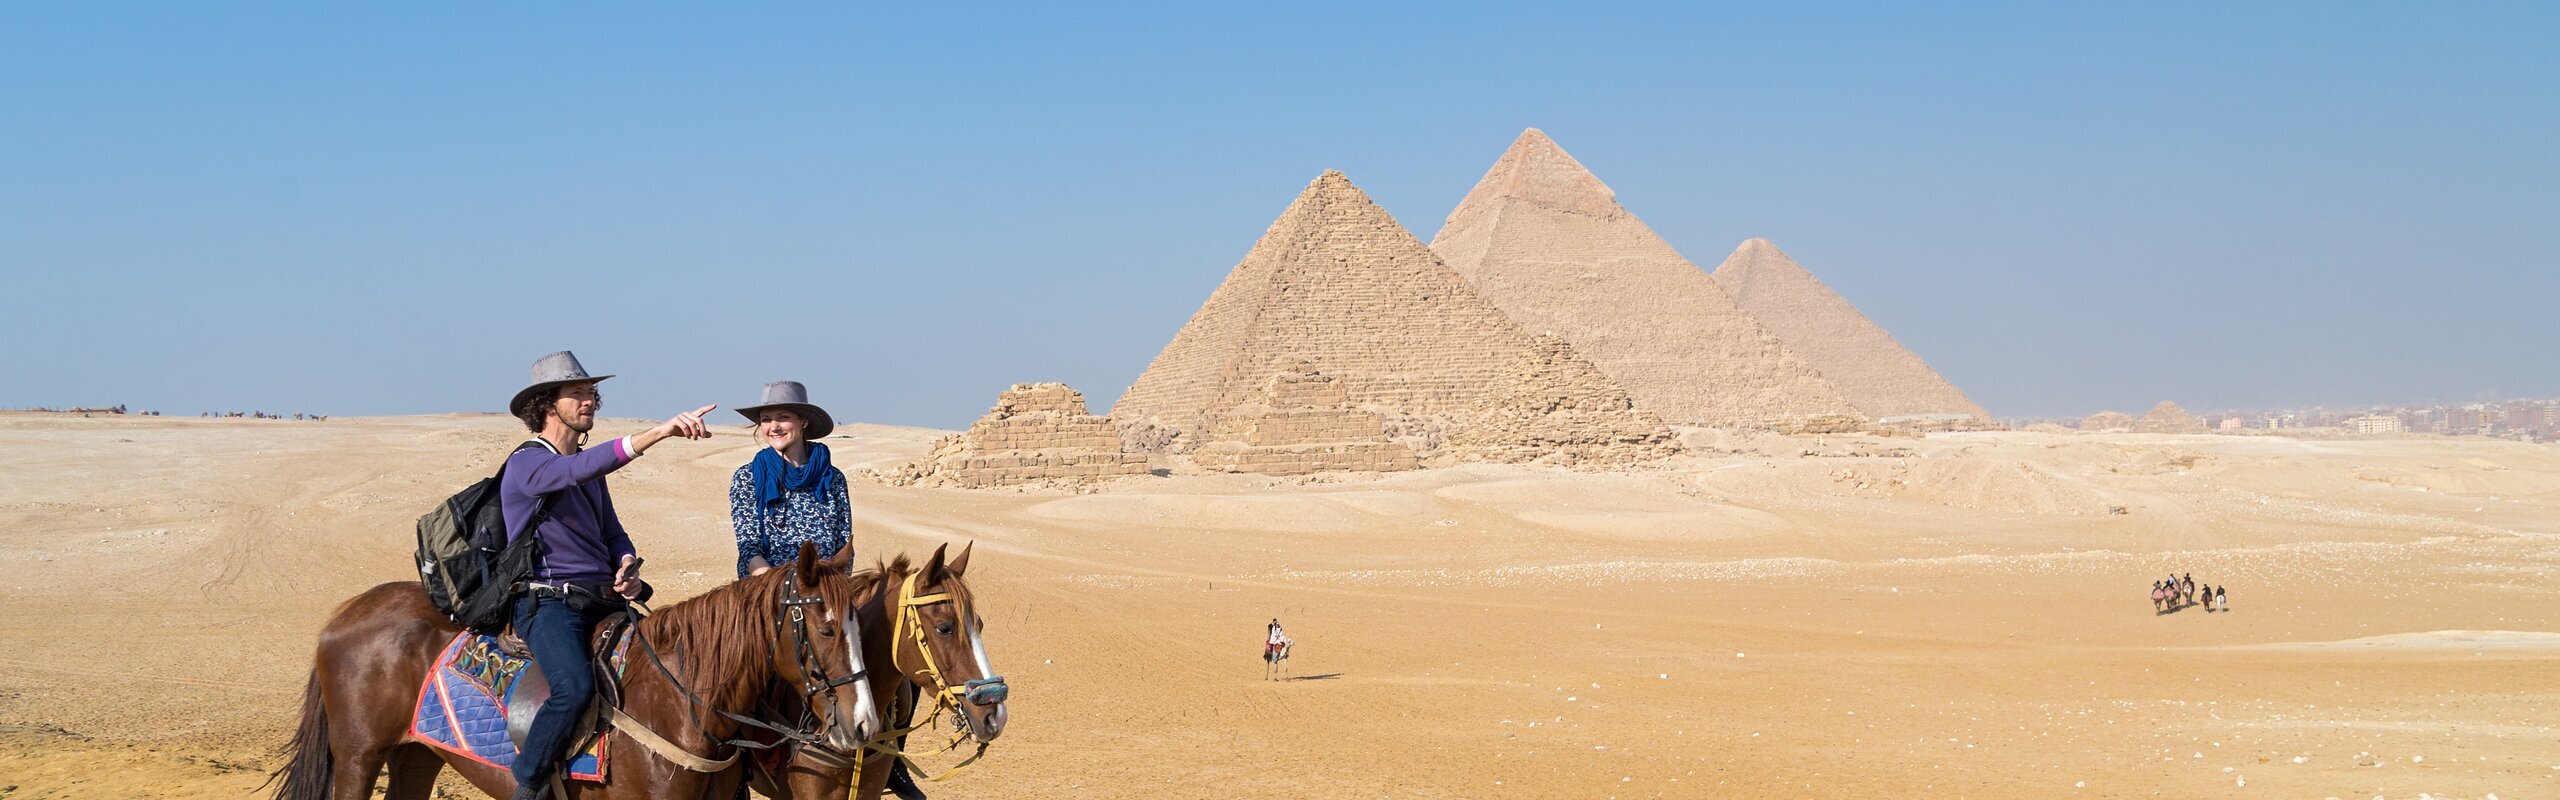 Egypt Travel Guide: Customize a Unique Personalized Trip